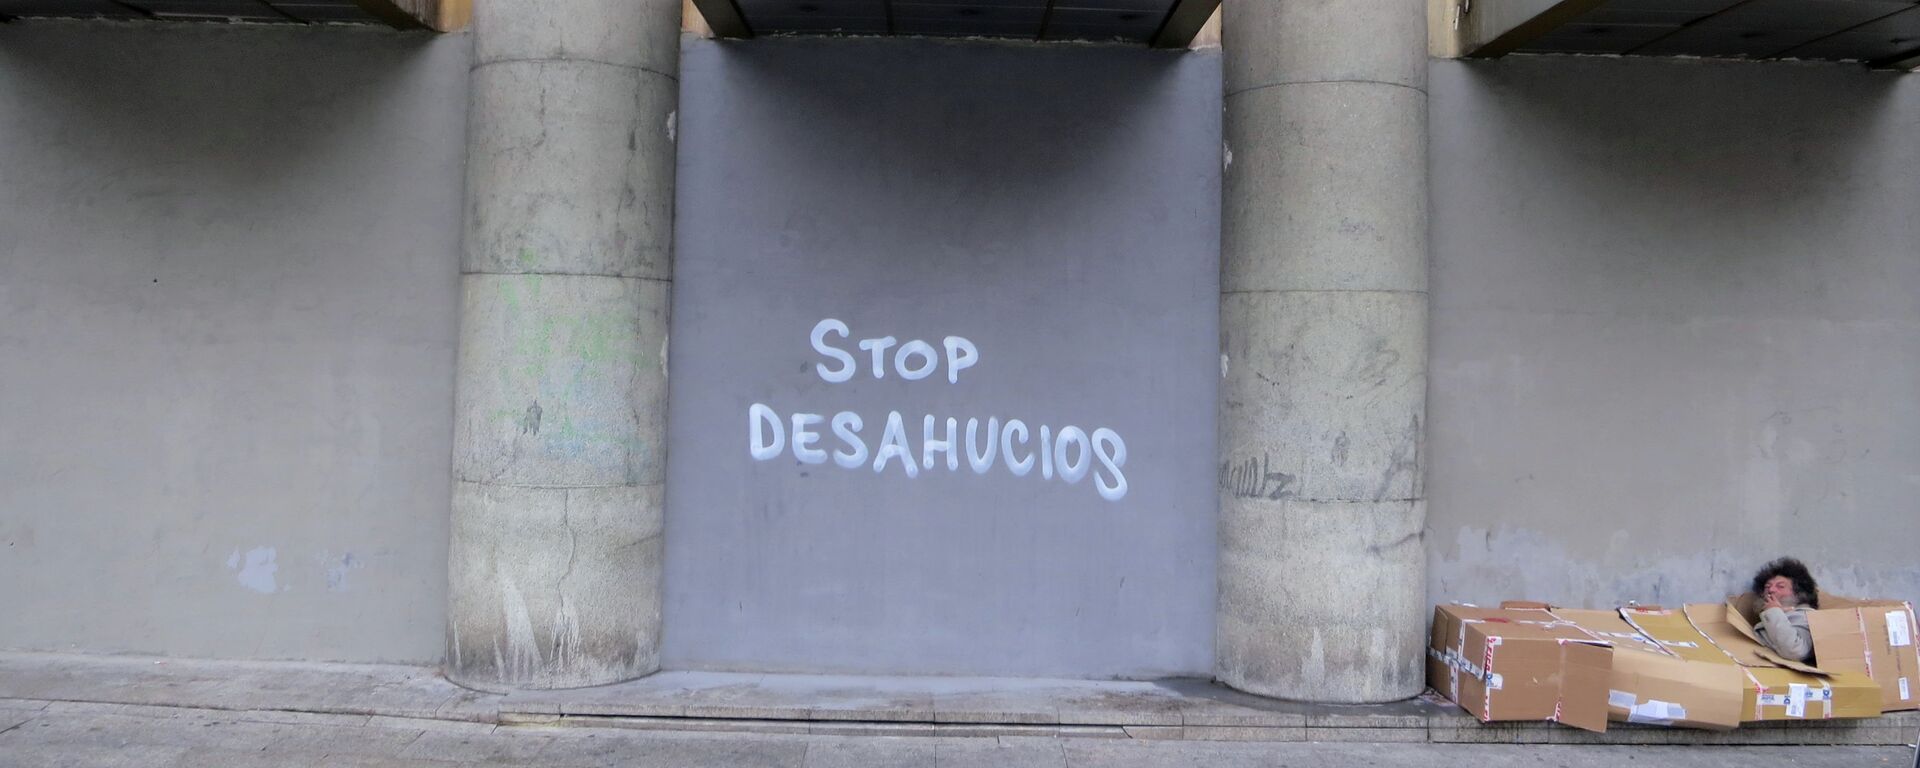 Stop desahucios - Sputnik Mundo, 1920, 23.03.2021